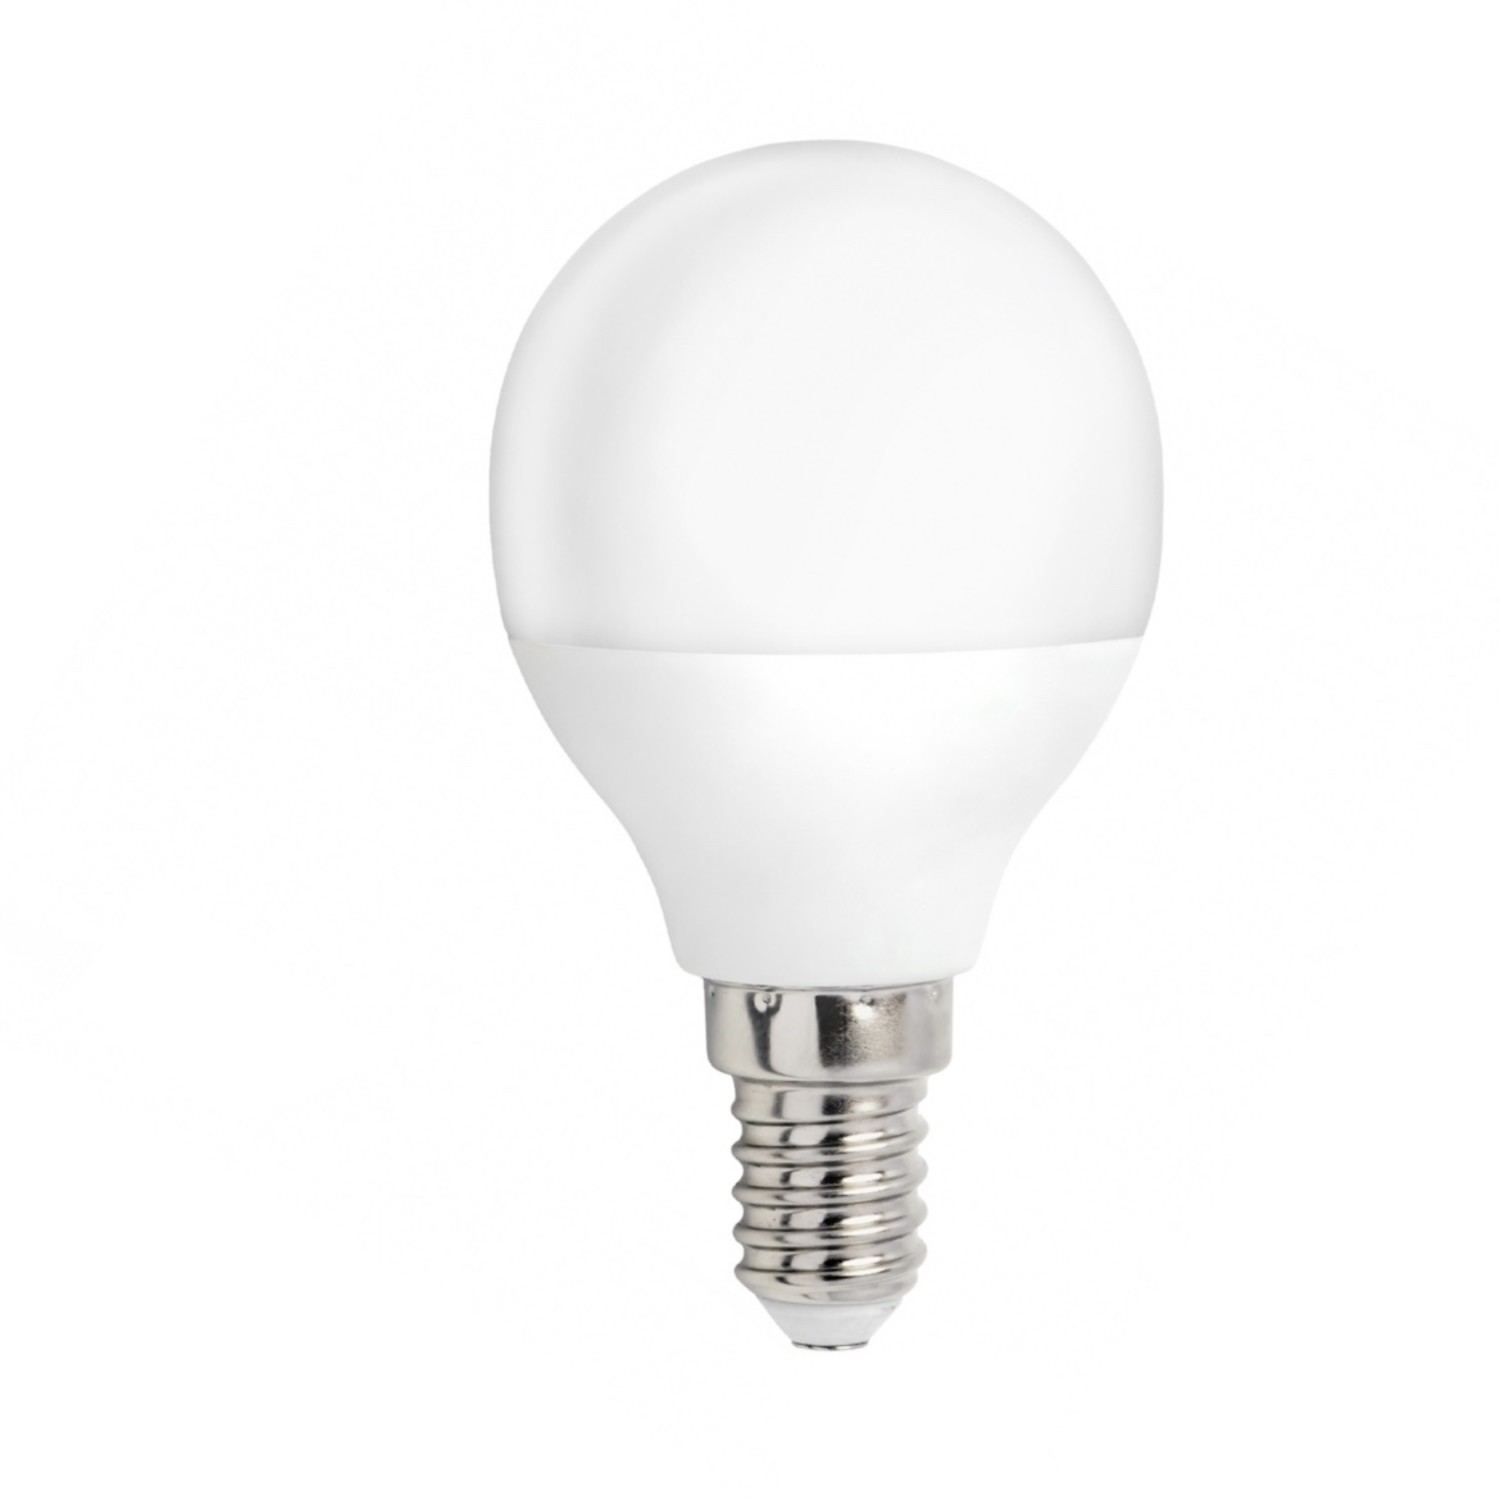 LED lamp E14 - 4W vervangt 40W - Daglicht wit 6400K - Ledlichtdiscounter.nl